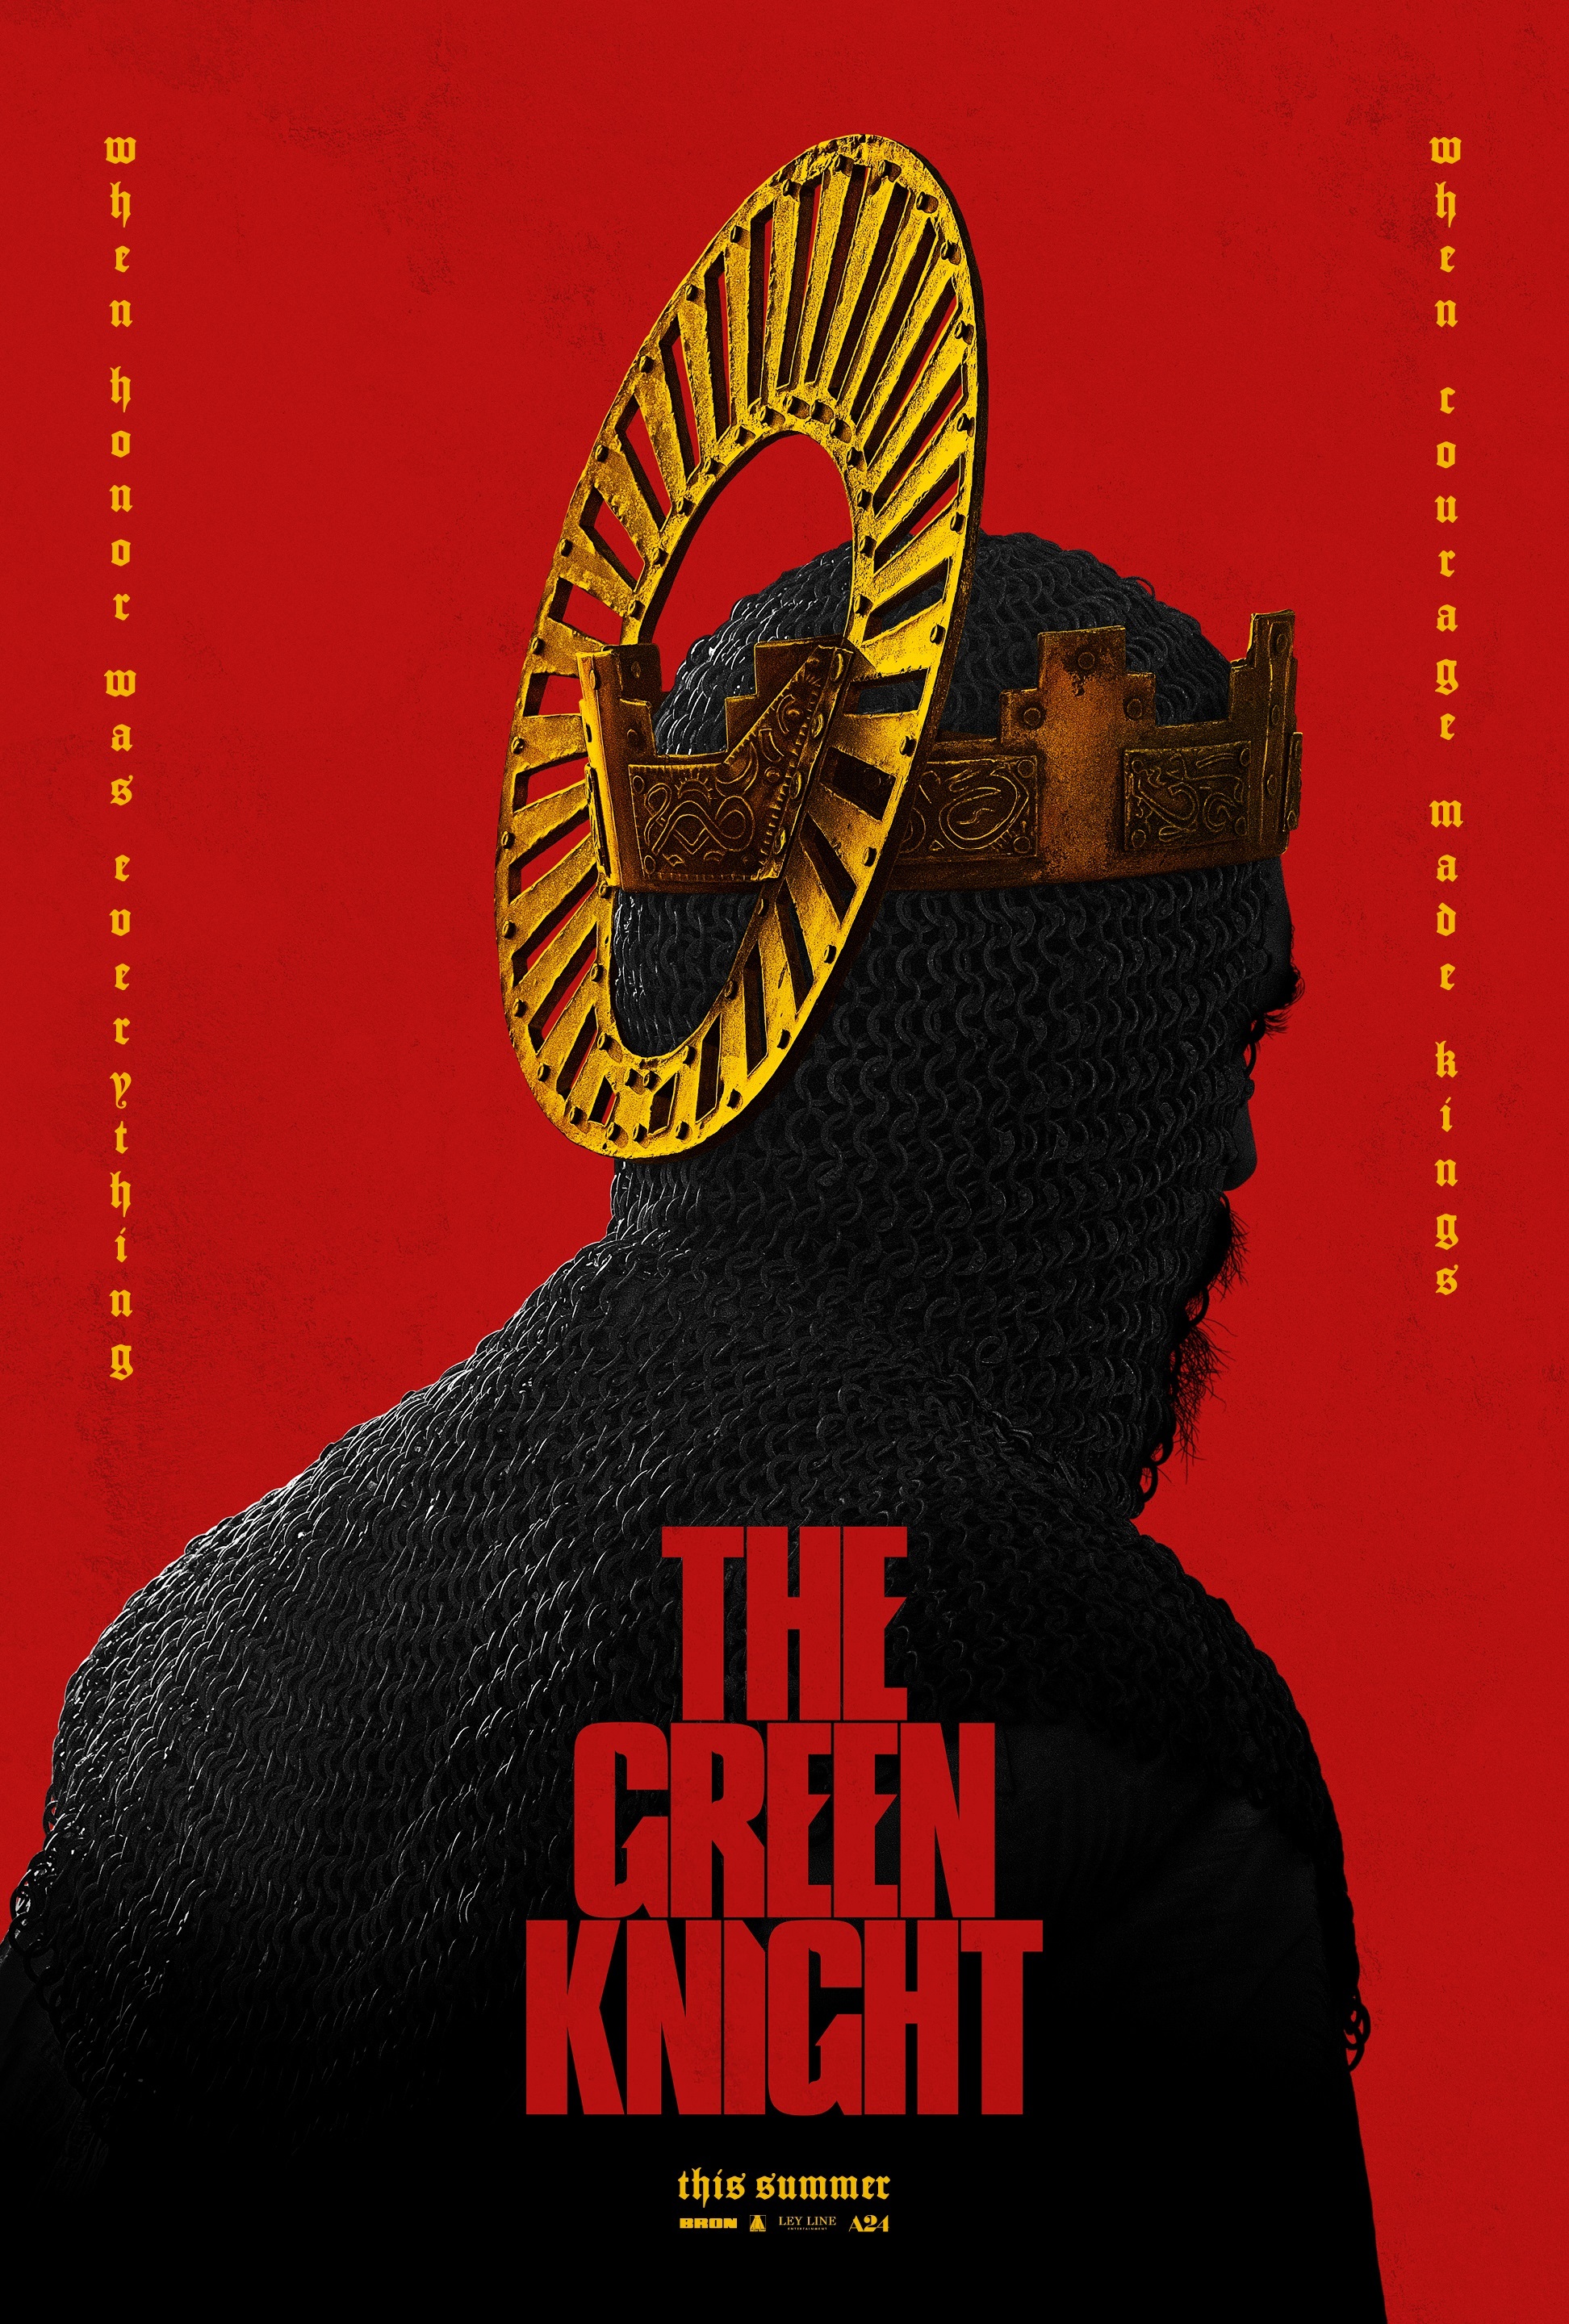 Stiahni si Filmy CZ/SK dabing Zelený rytíř / The Green Knight (2021)(CZ/EN)[WEBRip][1080p] = CSFD 63%